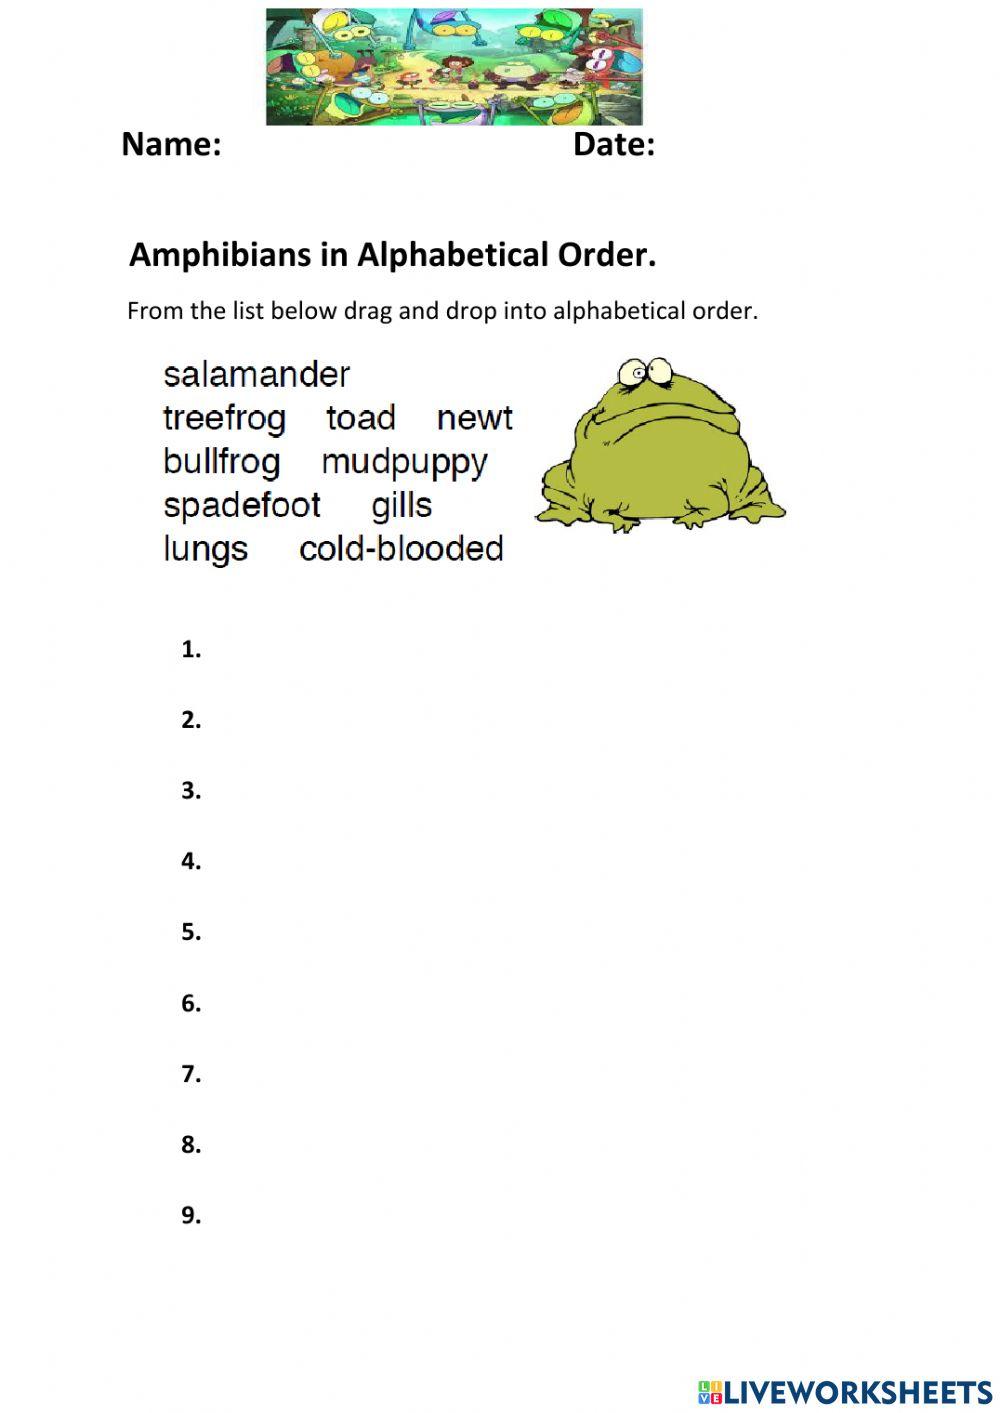 Amphibian Alphabetical Order